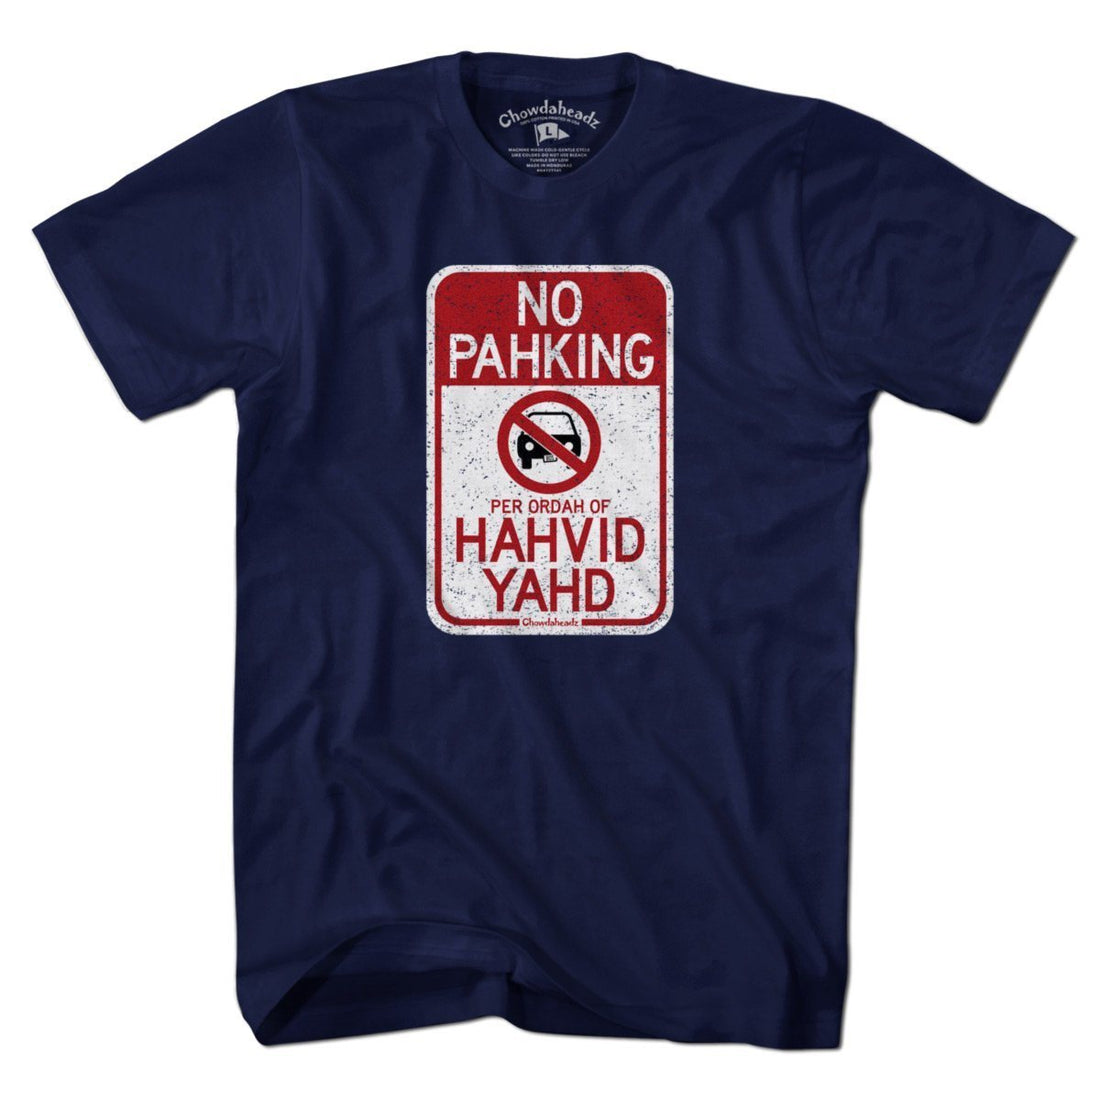 No Pahking Hahvid Yahd T-Shirt - Chowdaheadz